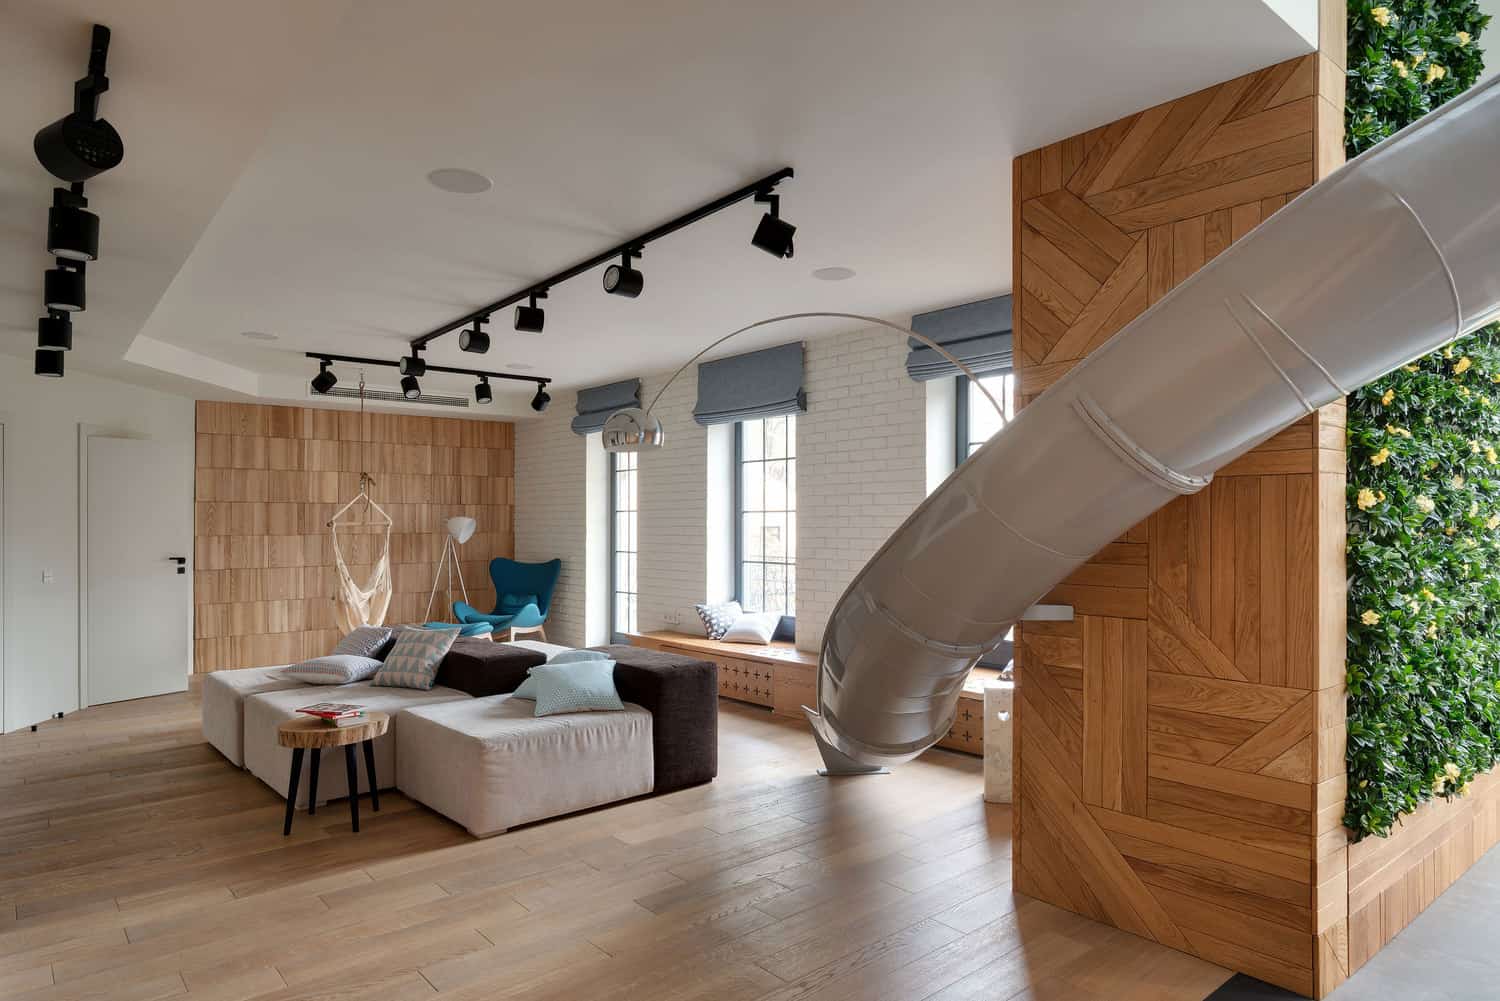 Apartment With Slide-KI Design-03-1 Kindesign